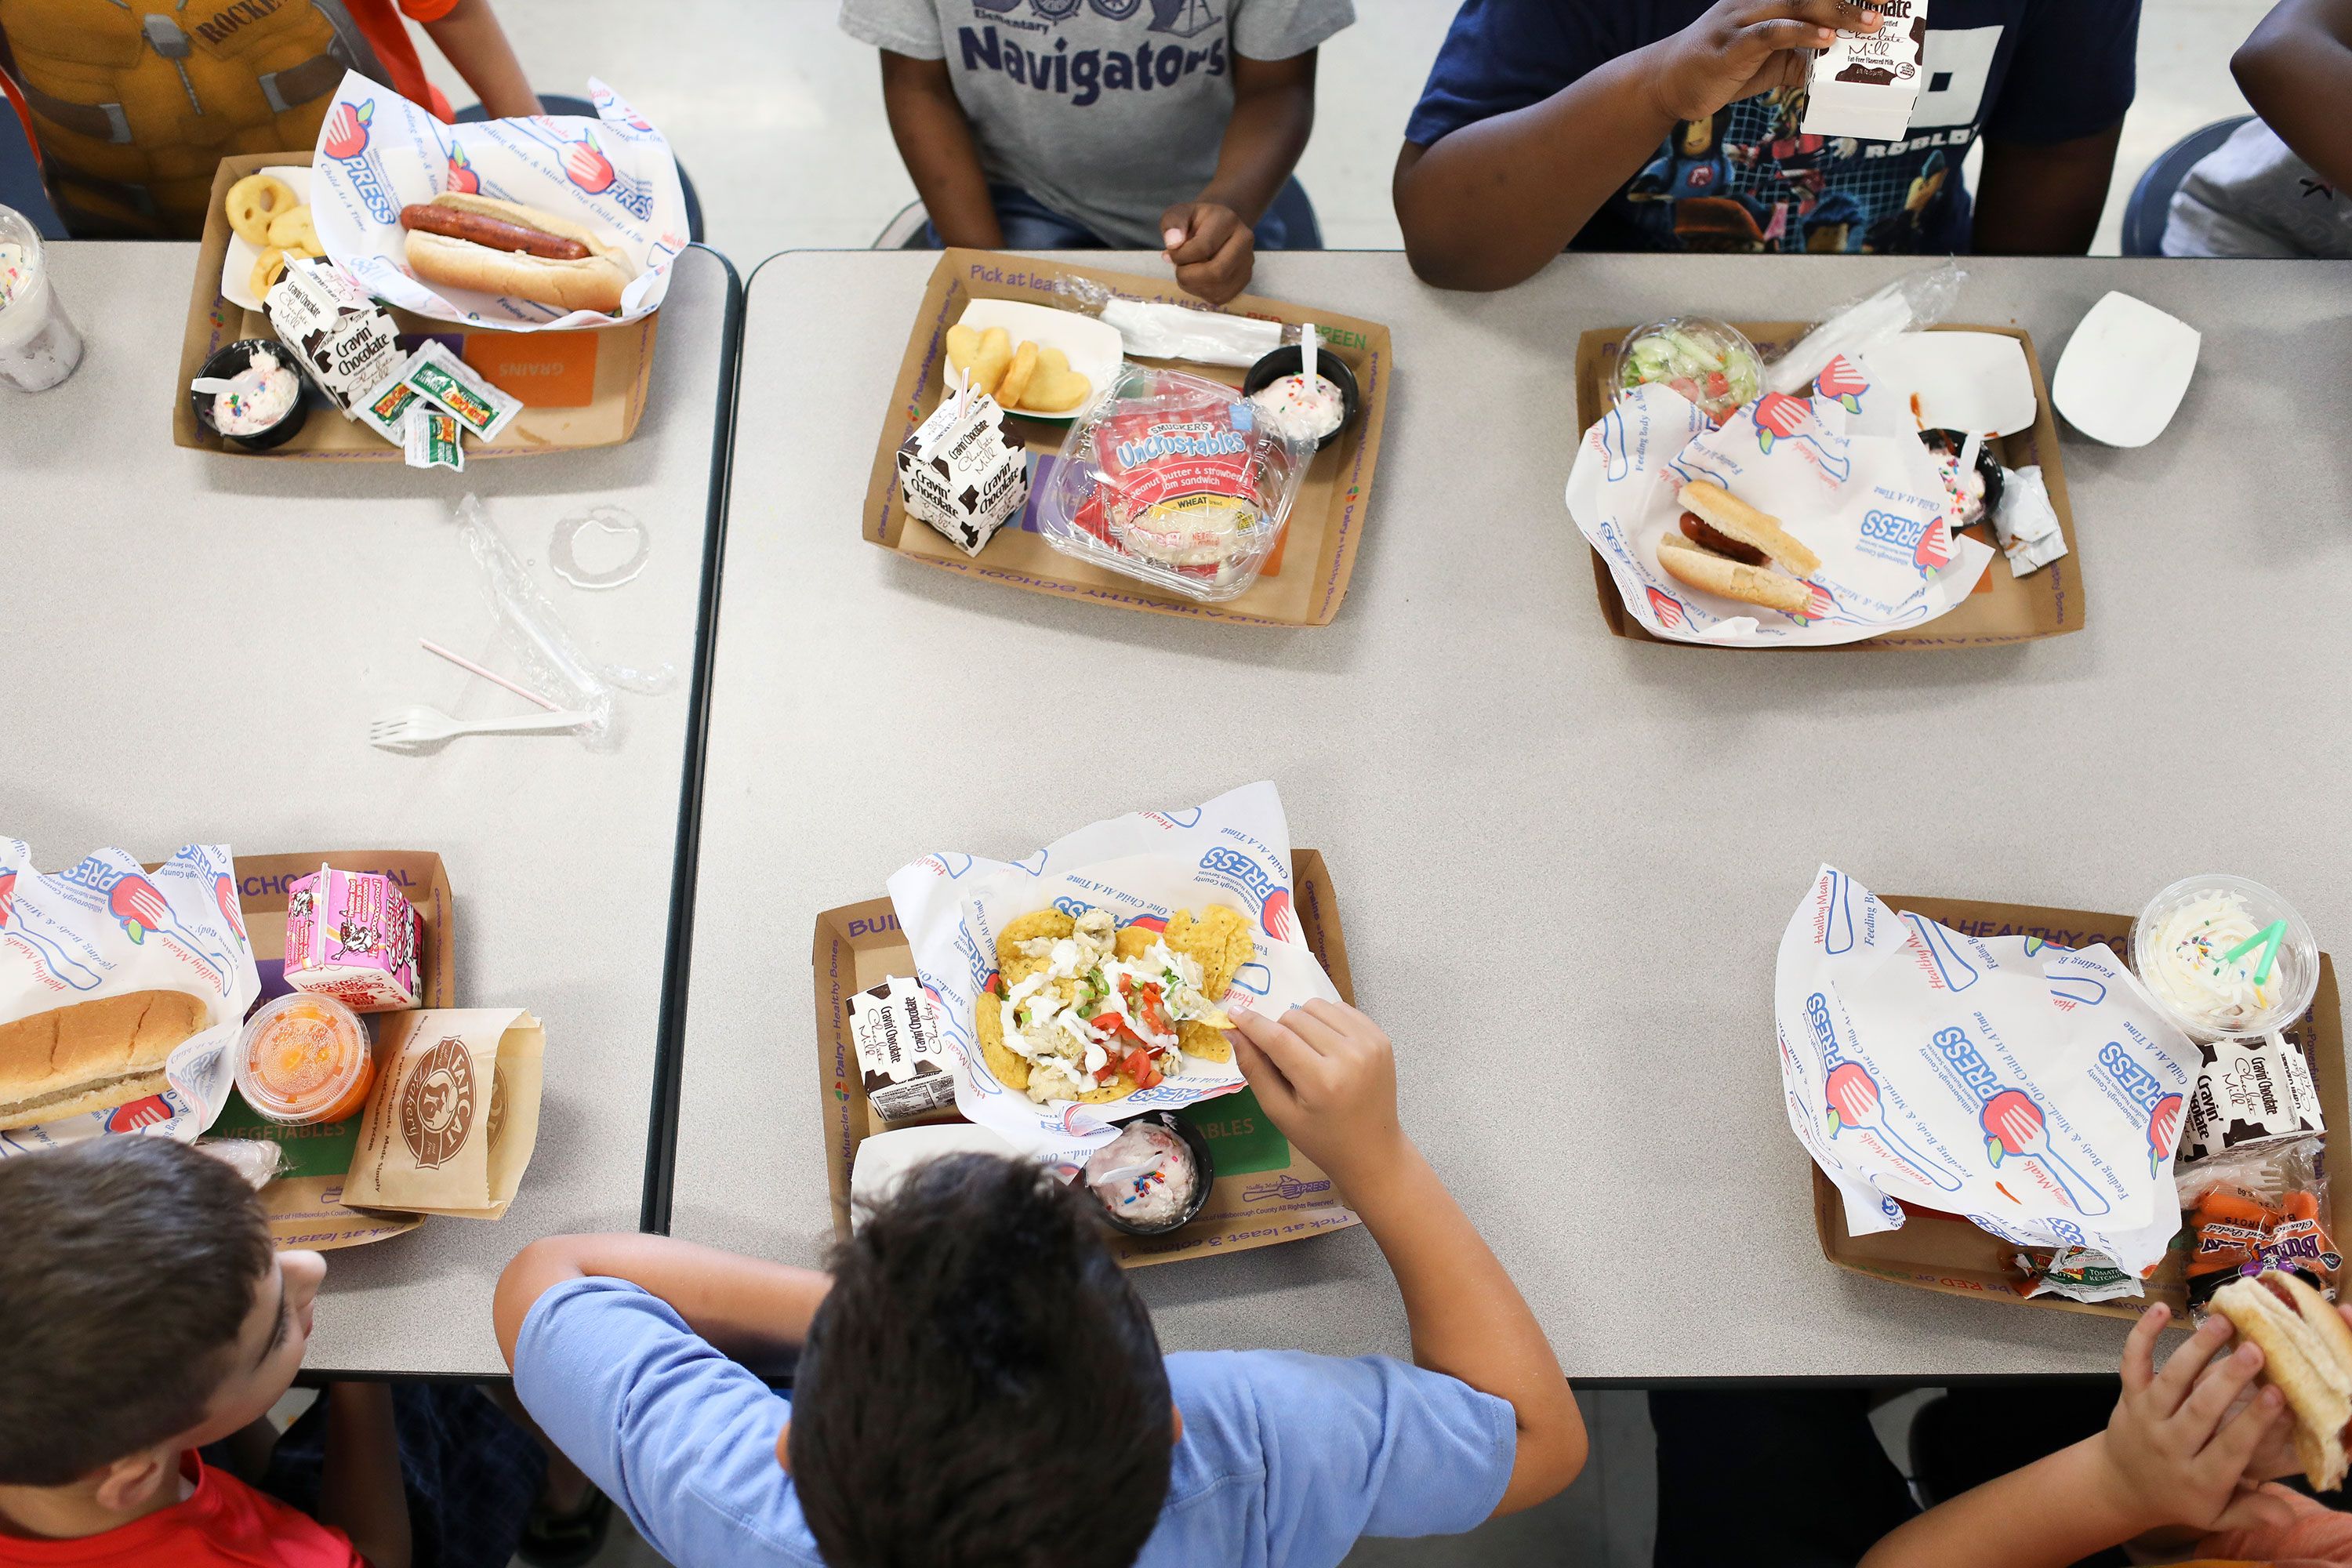 All School Kids Should Eat Lunch for Free – Mother Jones